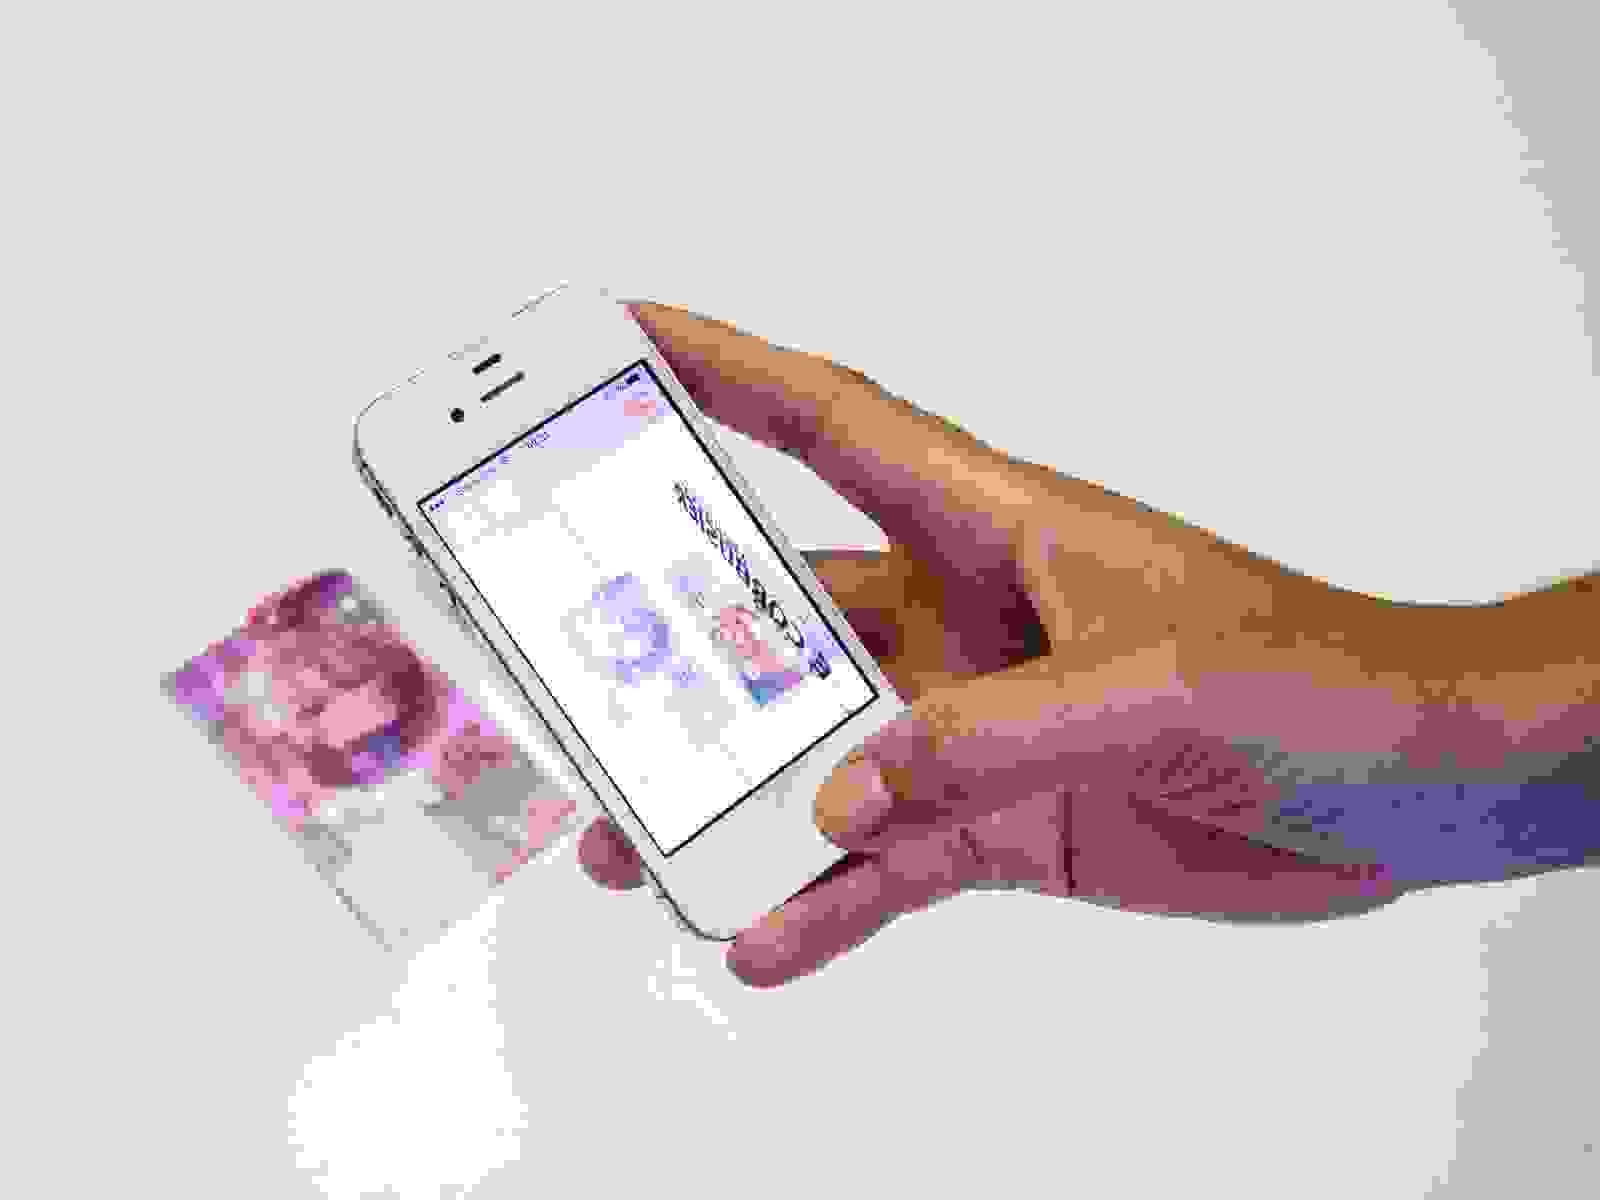 Augmented Reality App für Raiffeisenbank Wil